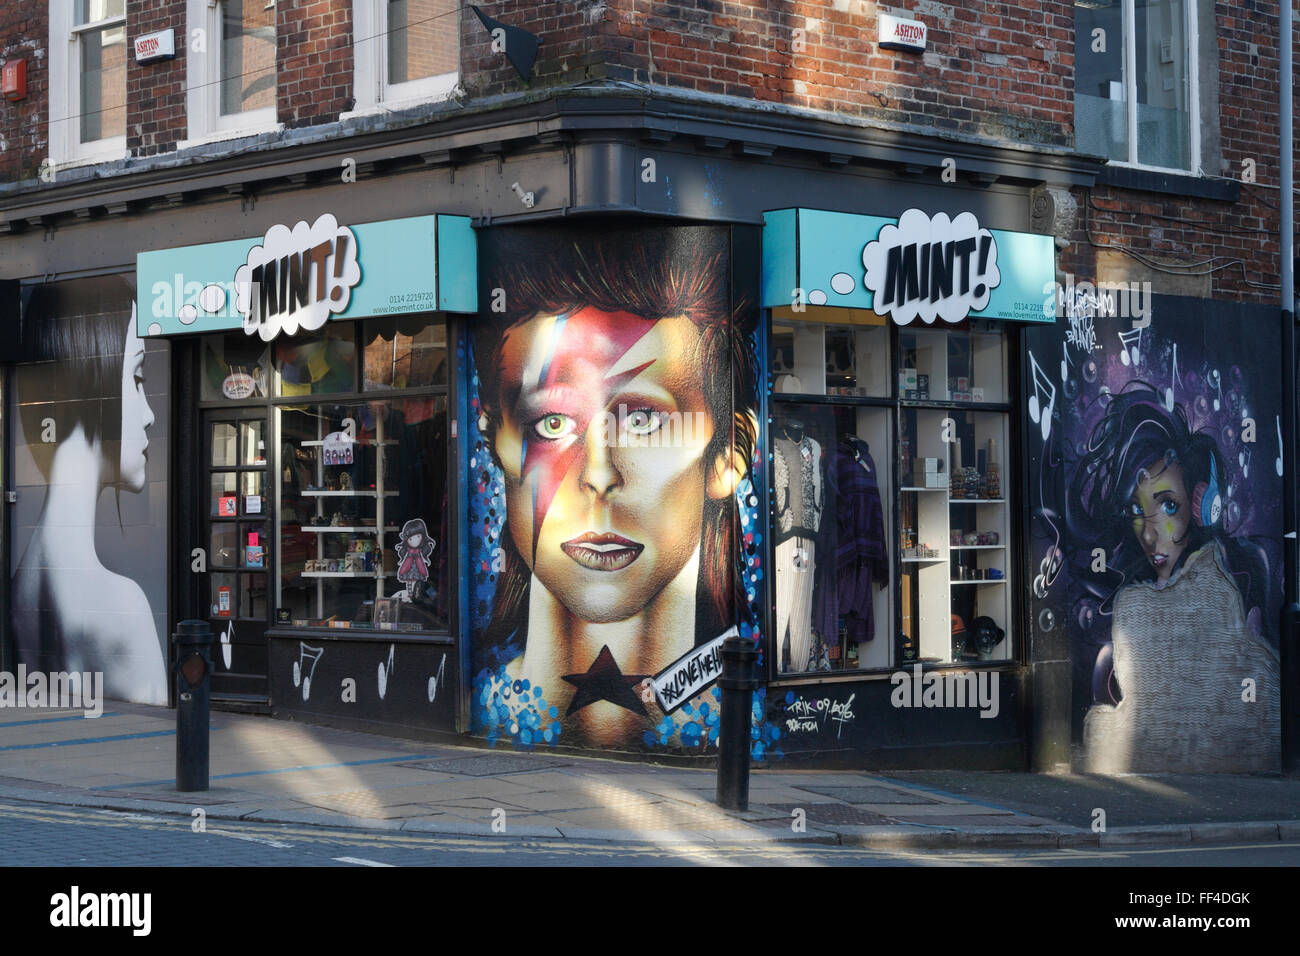 David Bowie Ziggy Stardust painting on street corner, Sheffield city centre England, street art mural Stock Photo